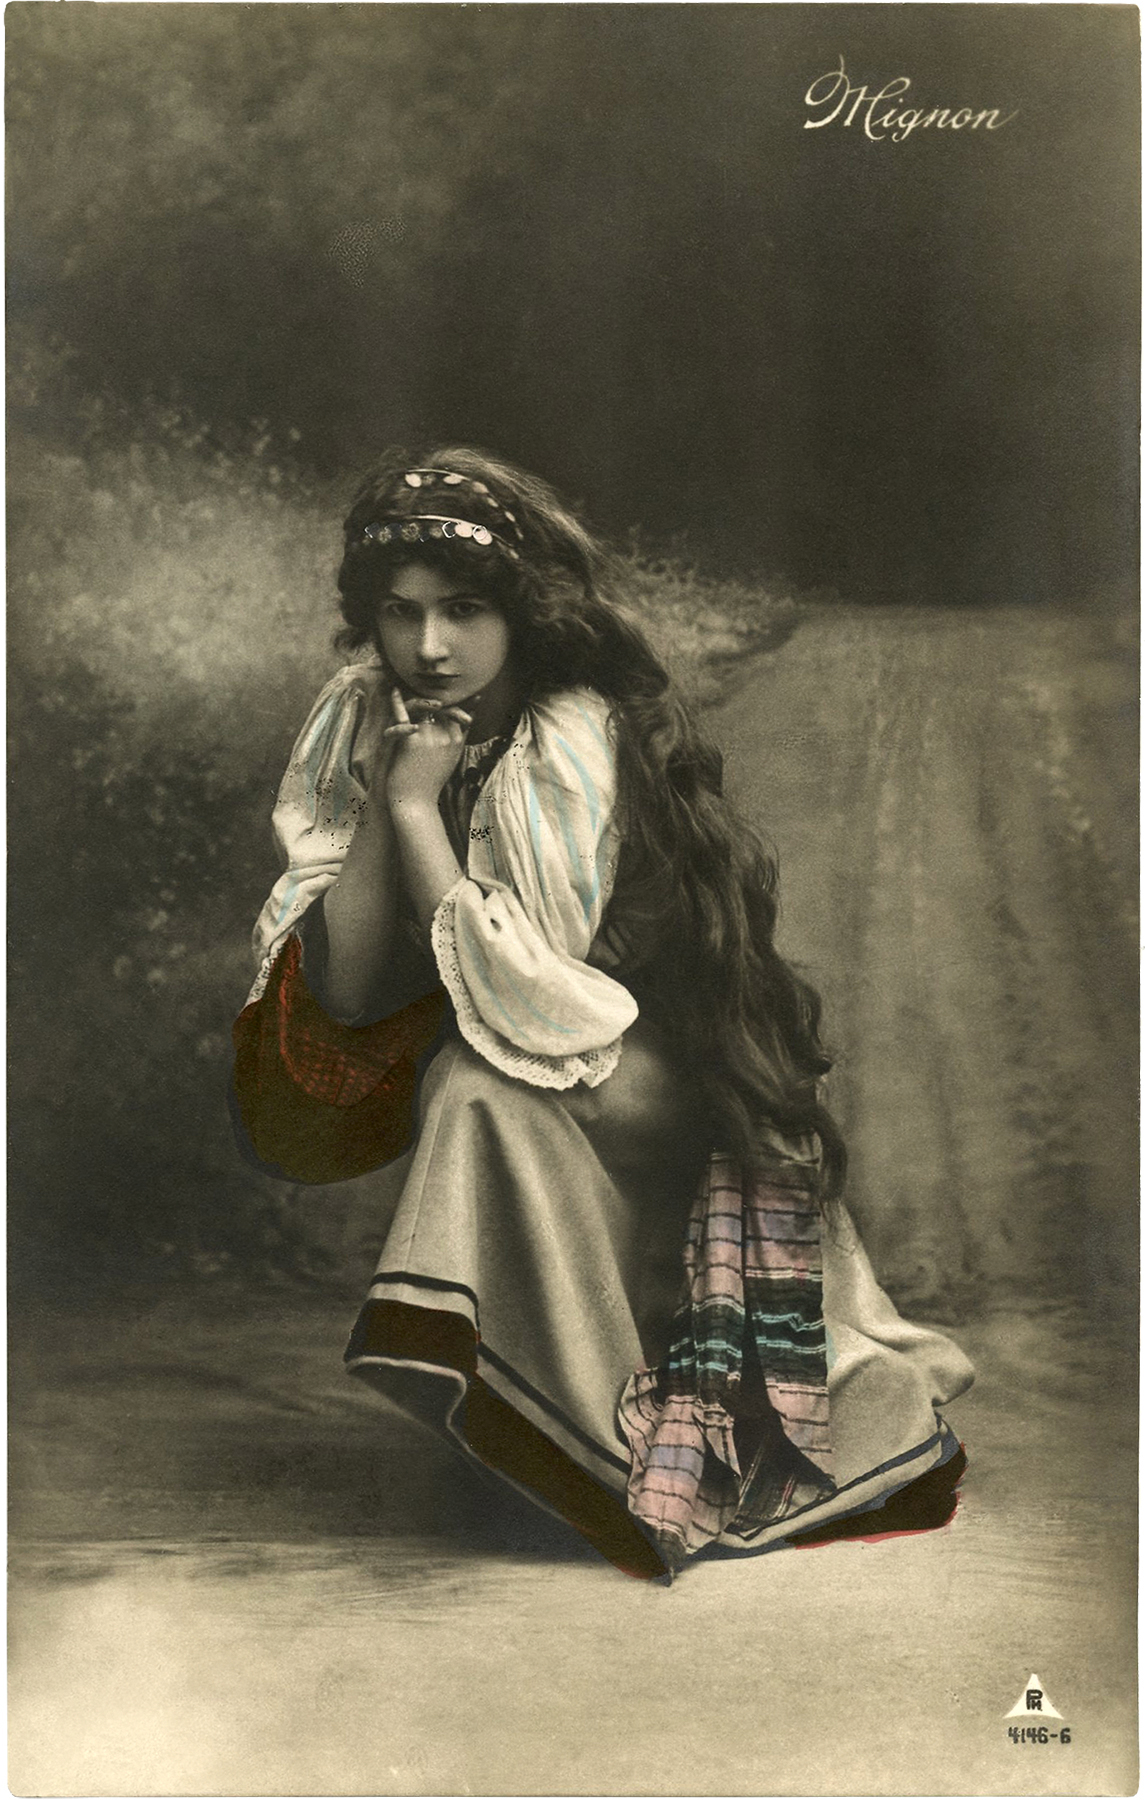 Pretty Vintage Gypsy Photo! - The Graphics Fairy